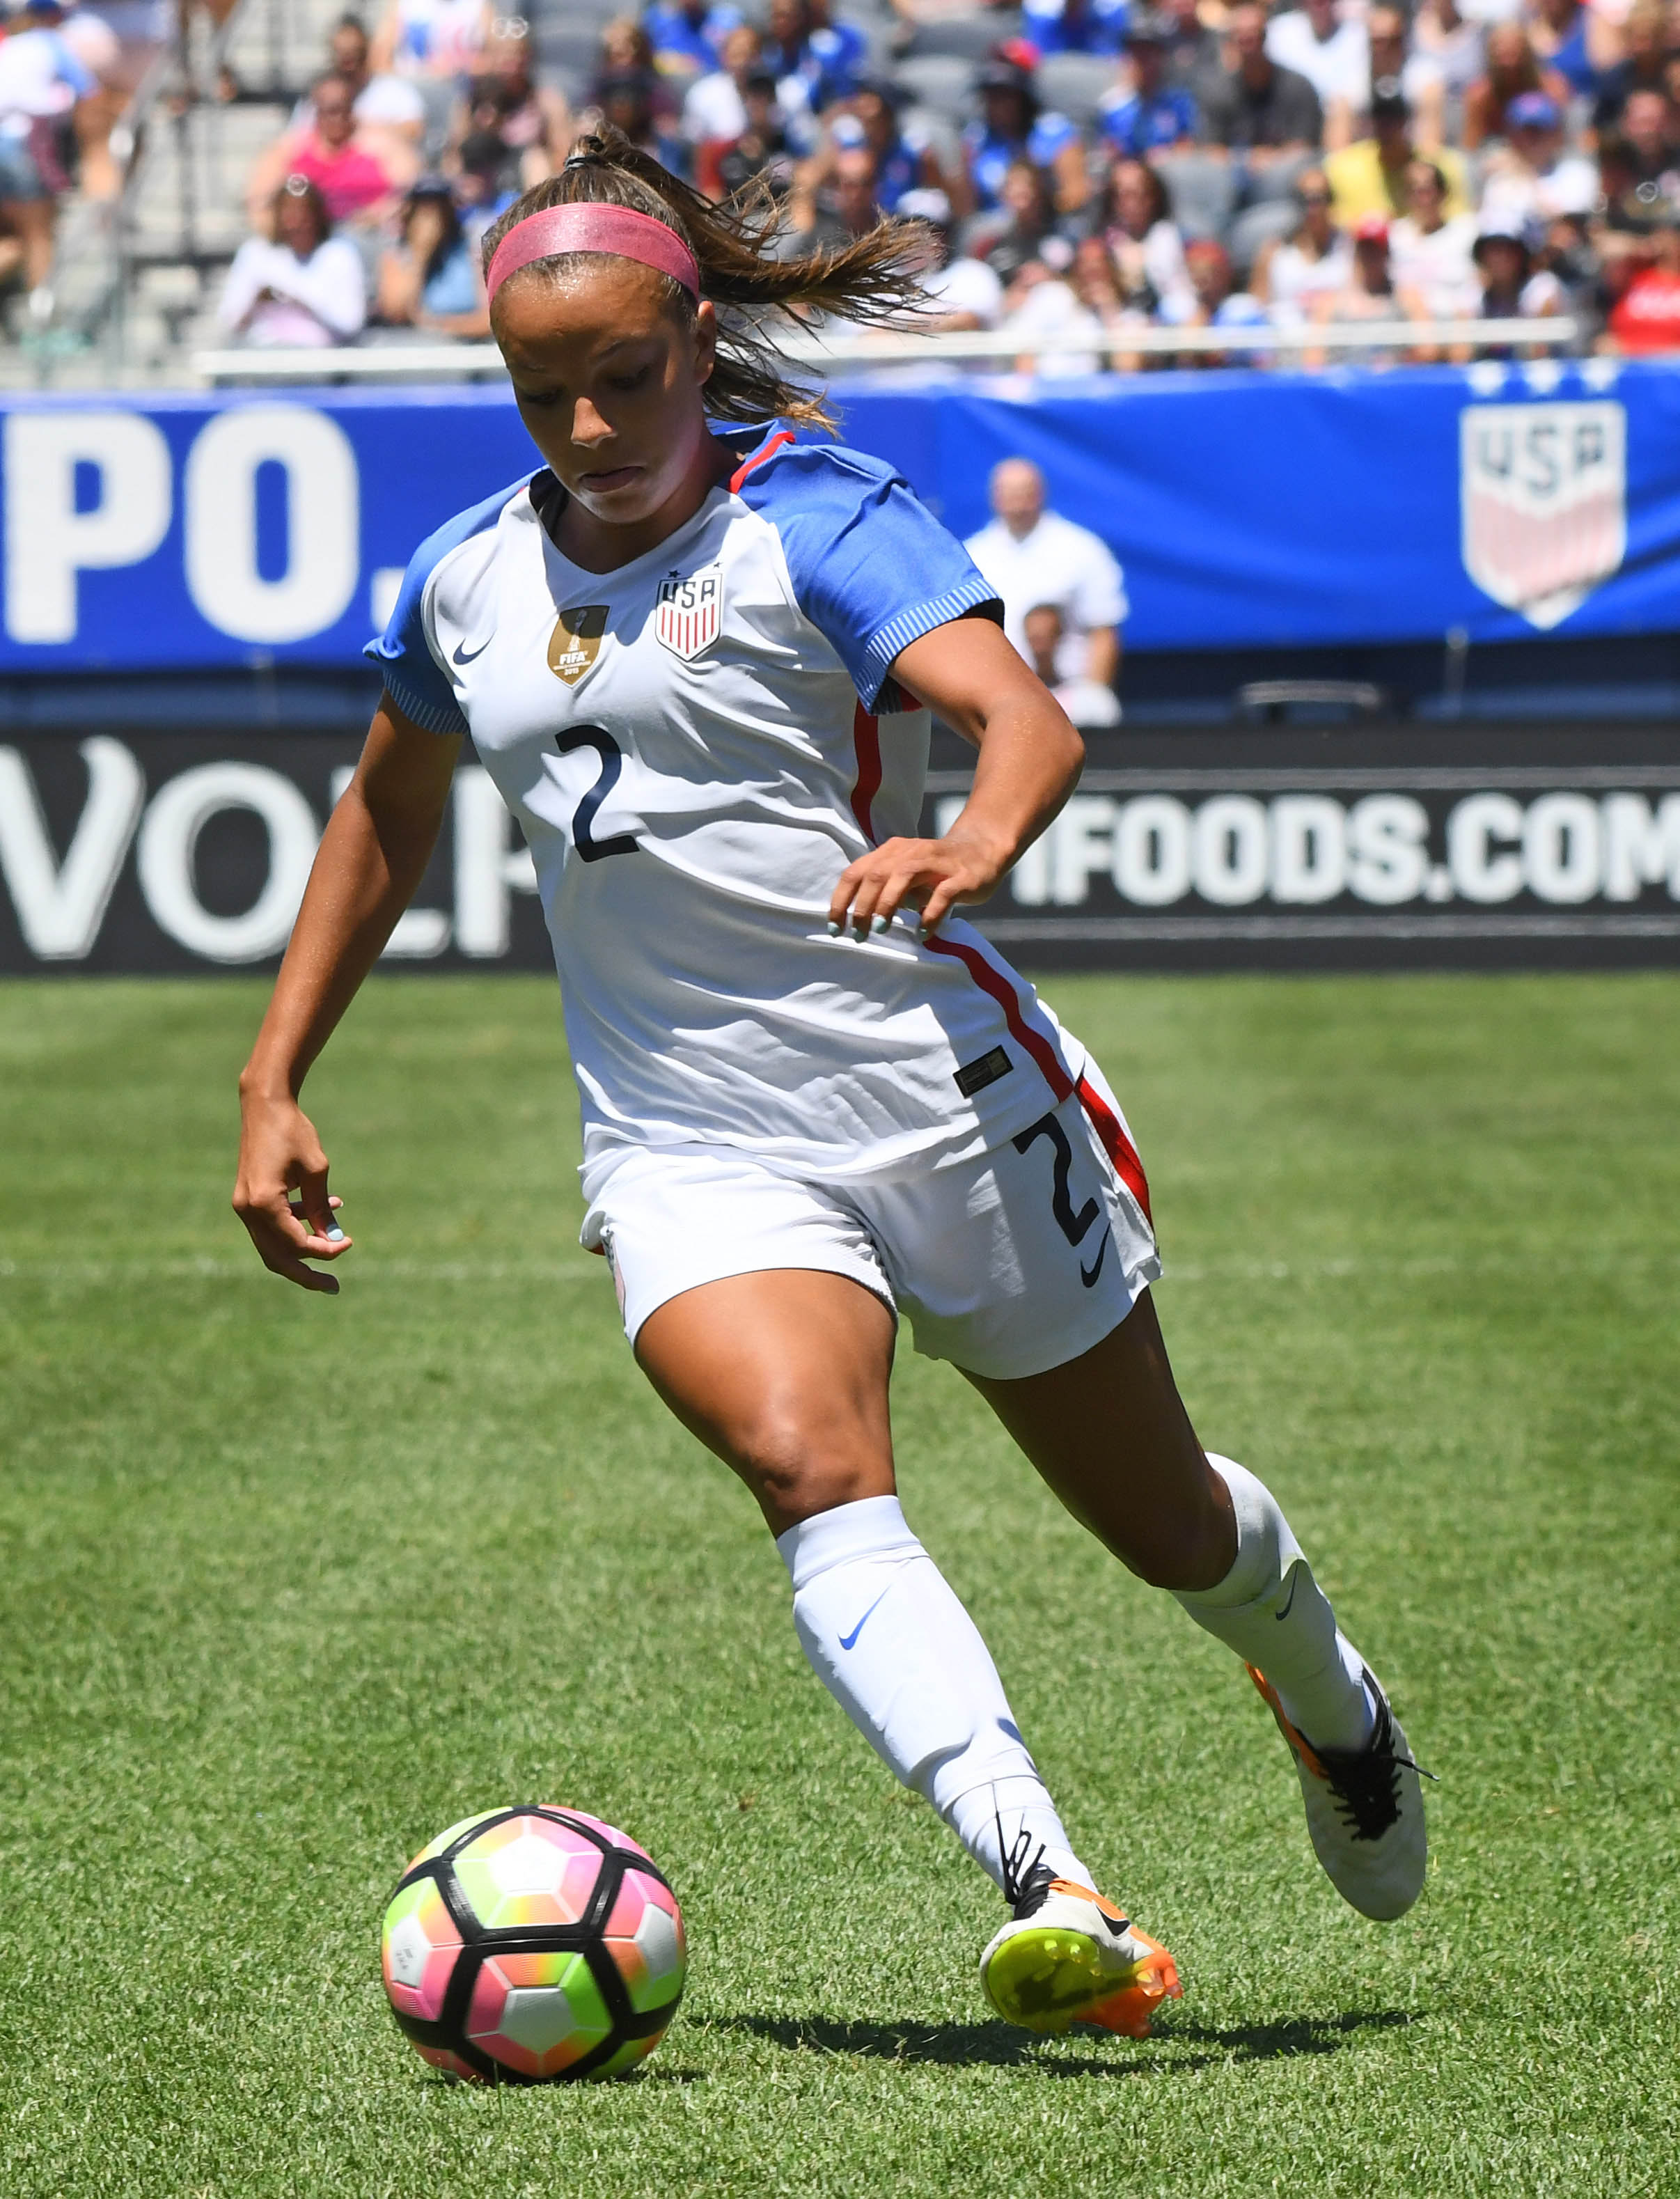 Soccer: International Friendly Women's Soccer-South Africa at USA